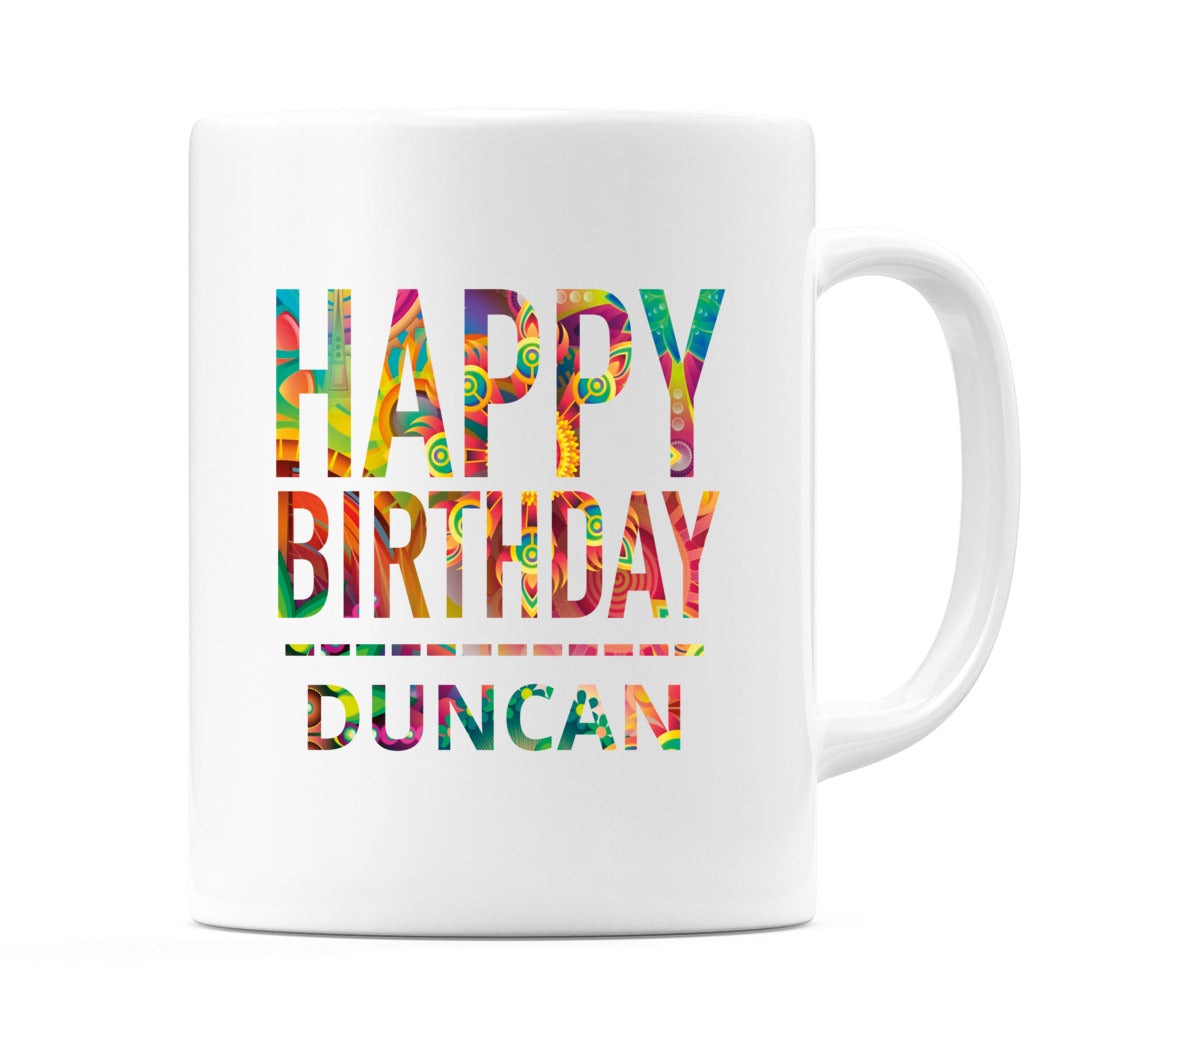 Happy Birthday Duncan (Tie Dye Effect) Mug Cup by WeDoMugs